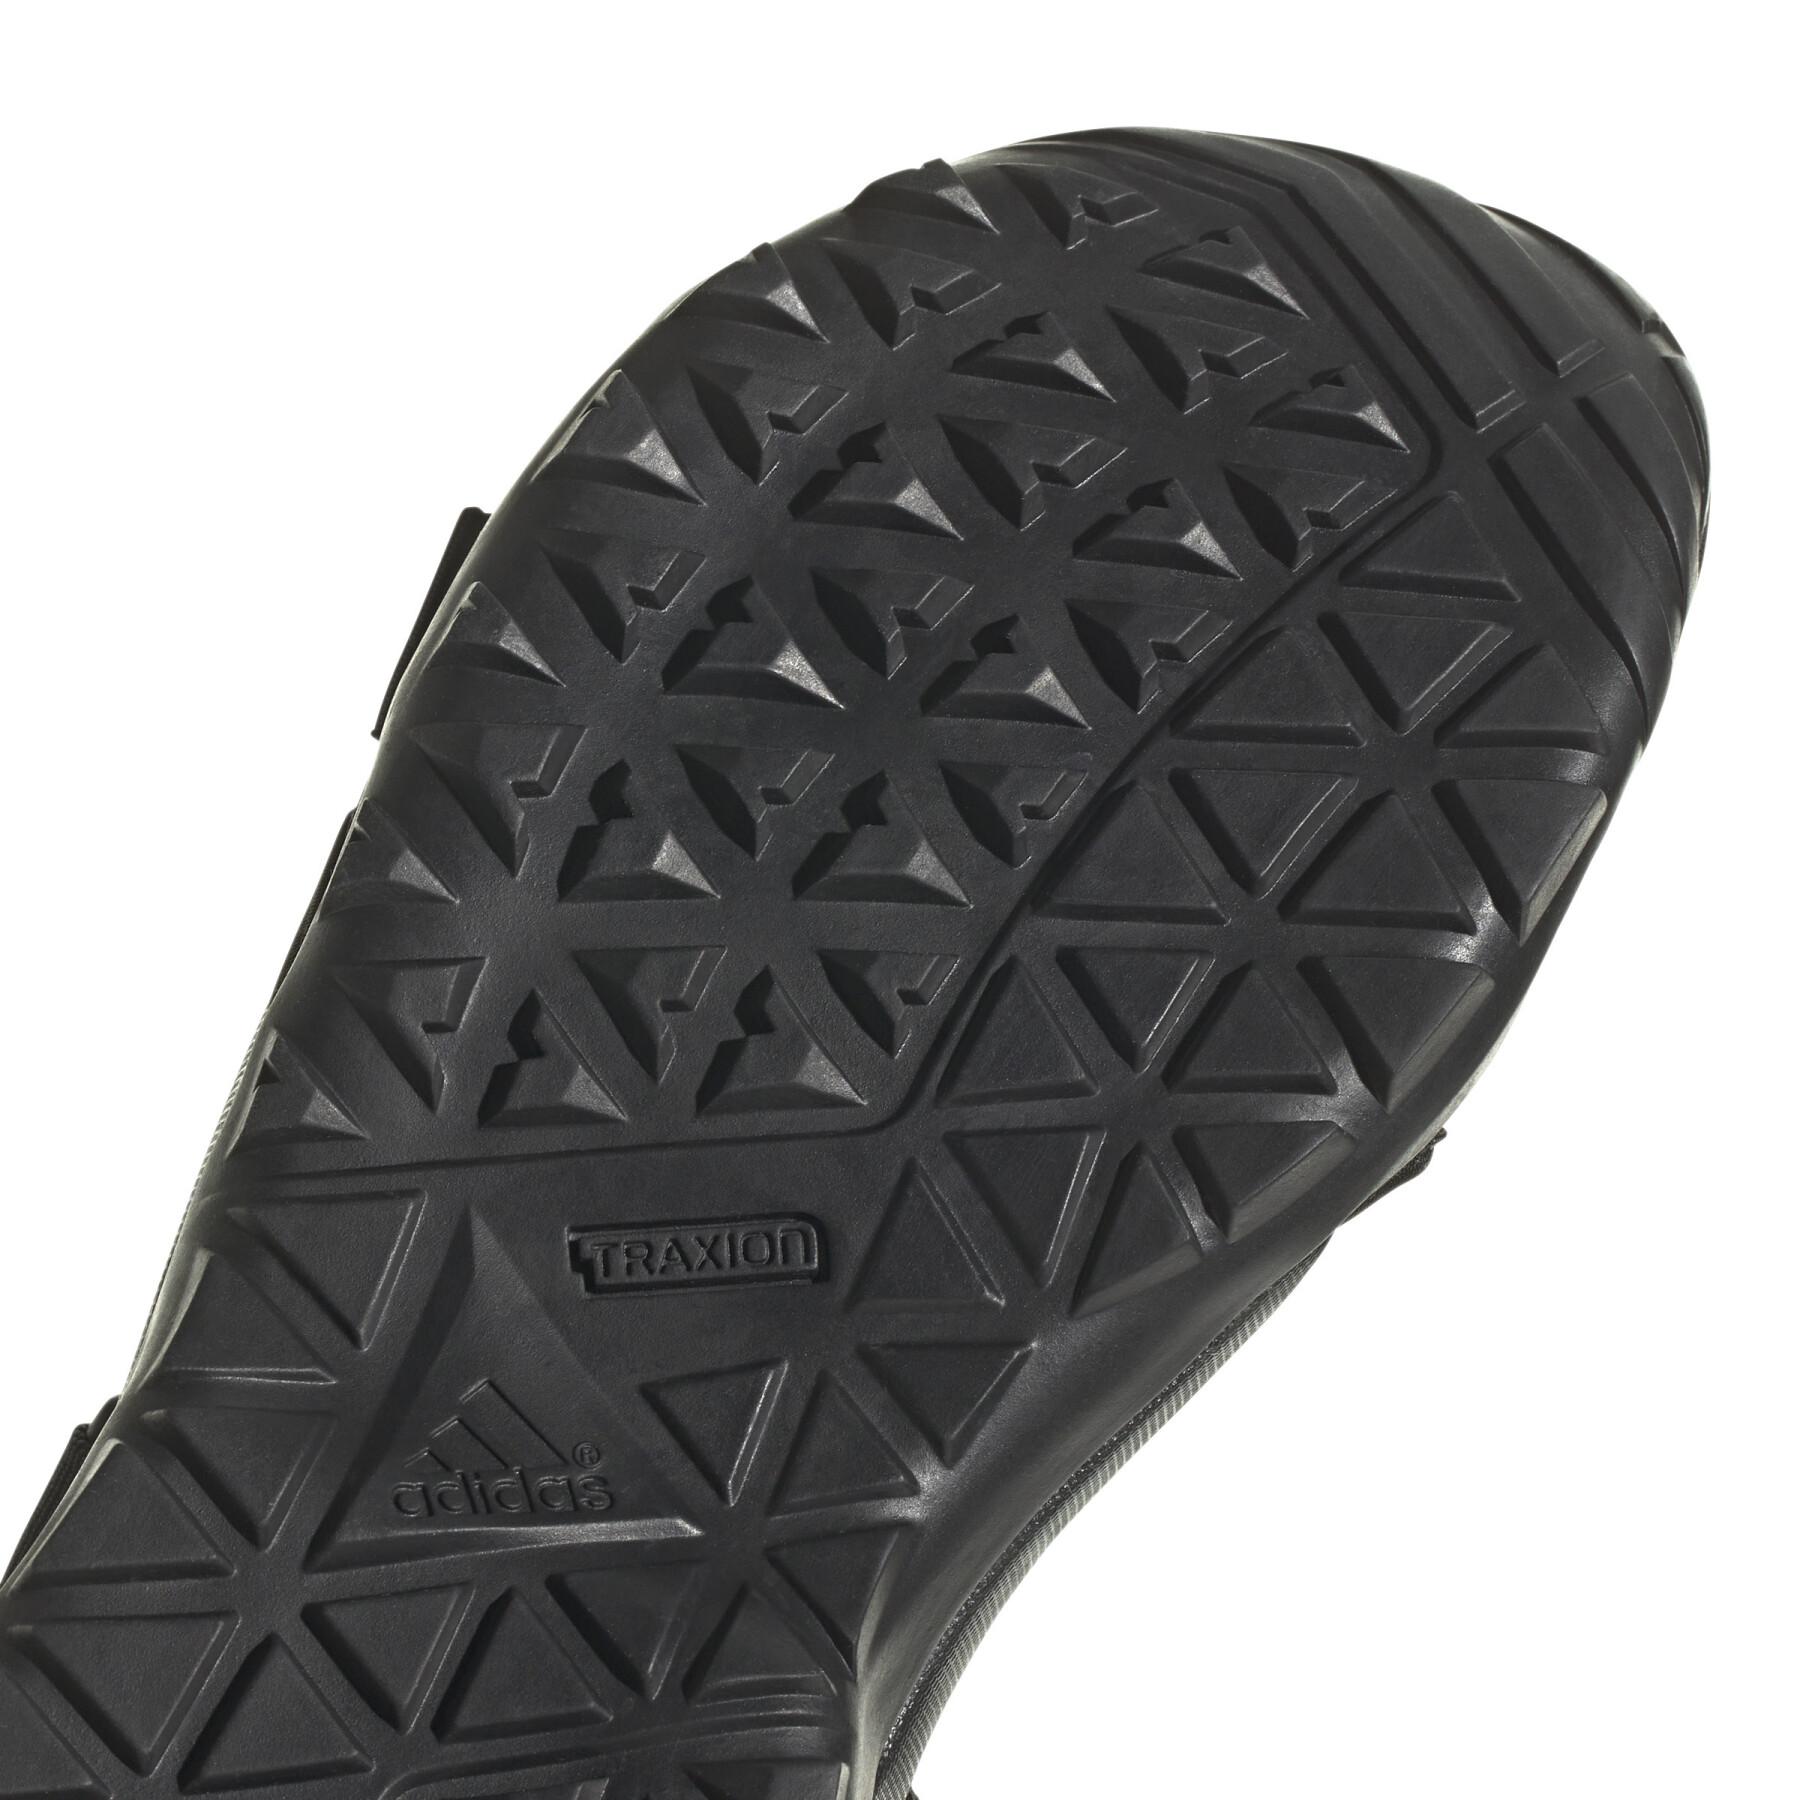 Sandals adidas Terrex Cyprex Ultra DLX